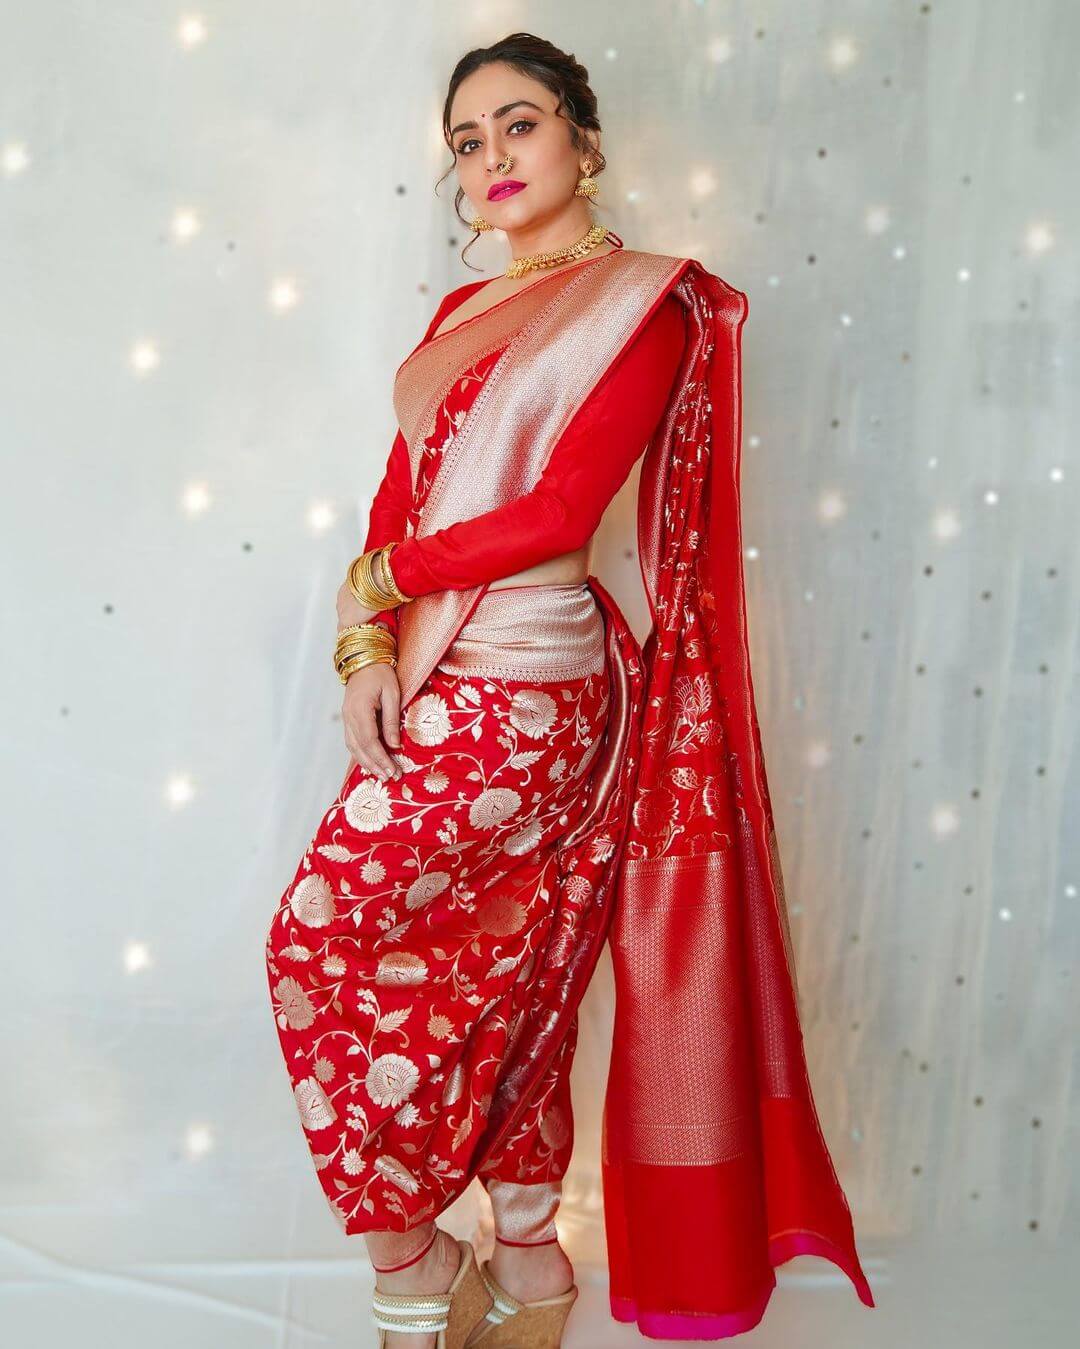 Amruta Khanvilkar In Traditional Red Banarasi Saree Amruta Khanvilkar Inspired Outfits, Fashion And Style